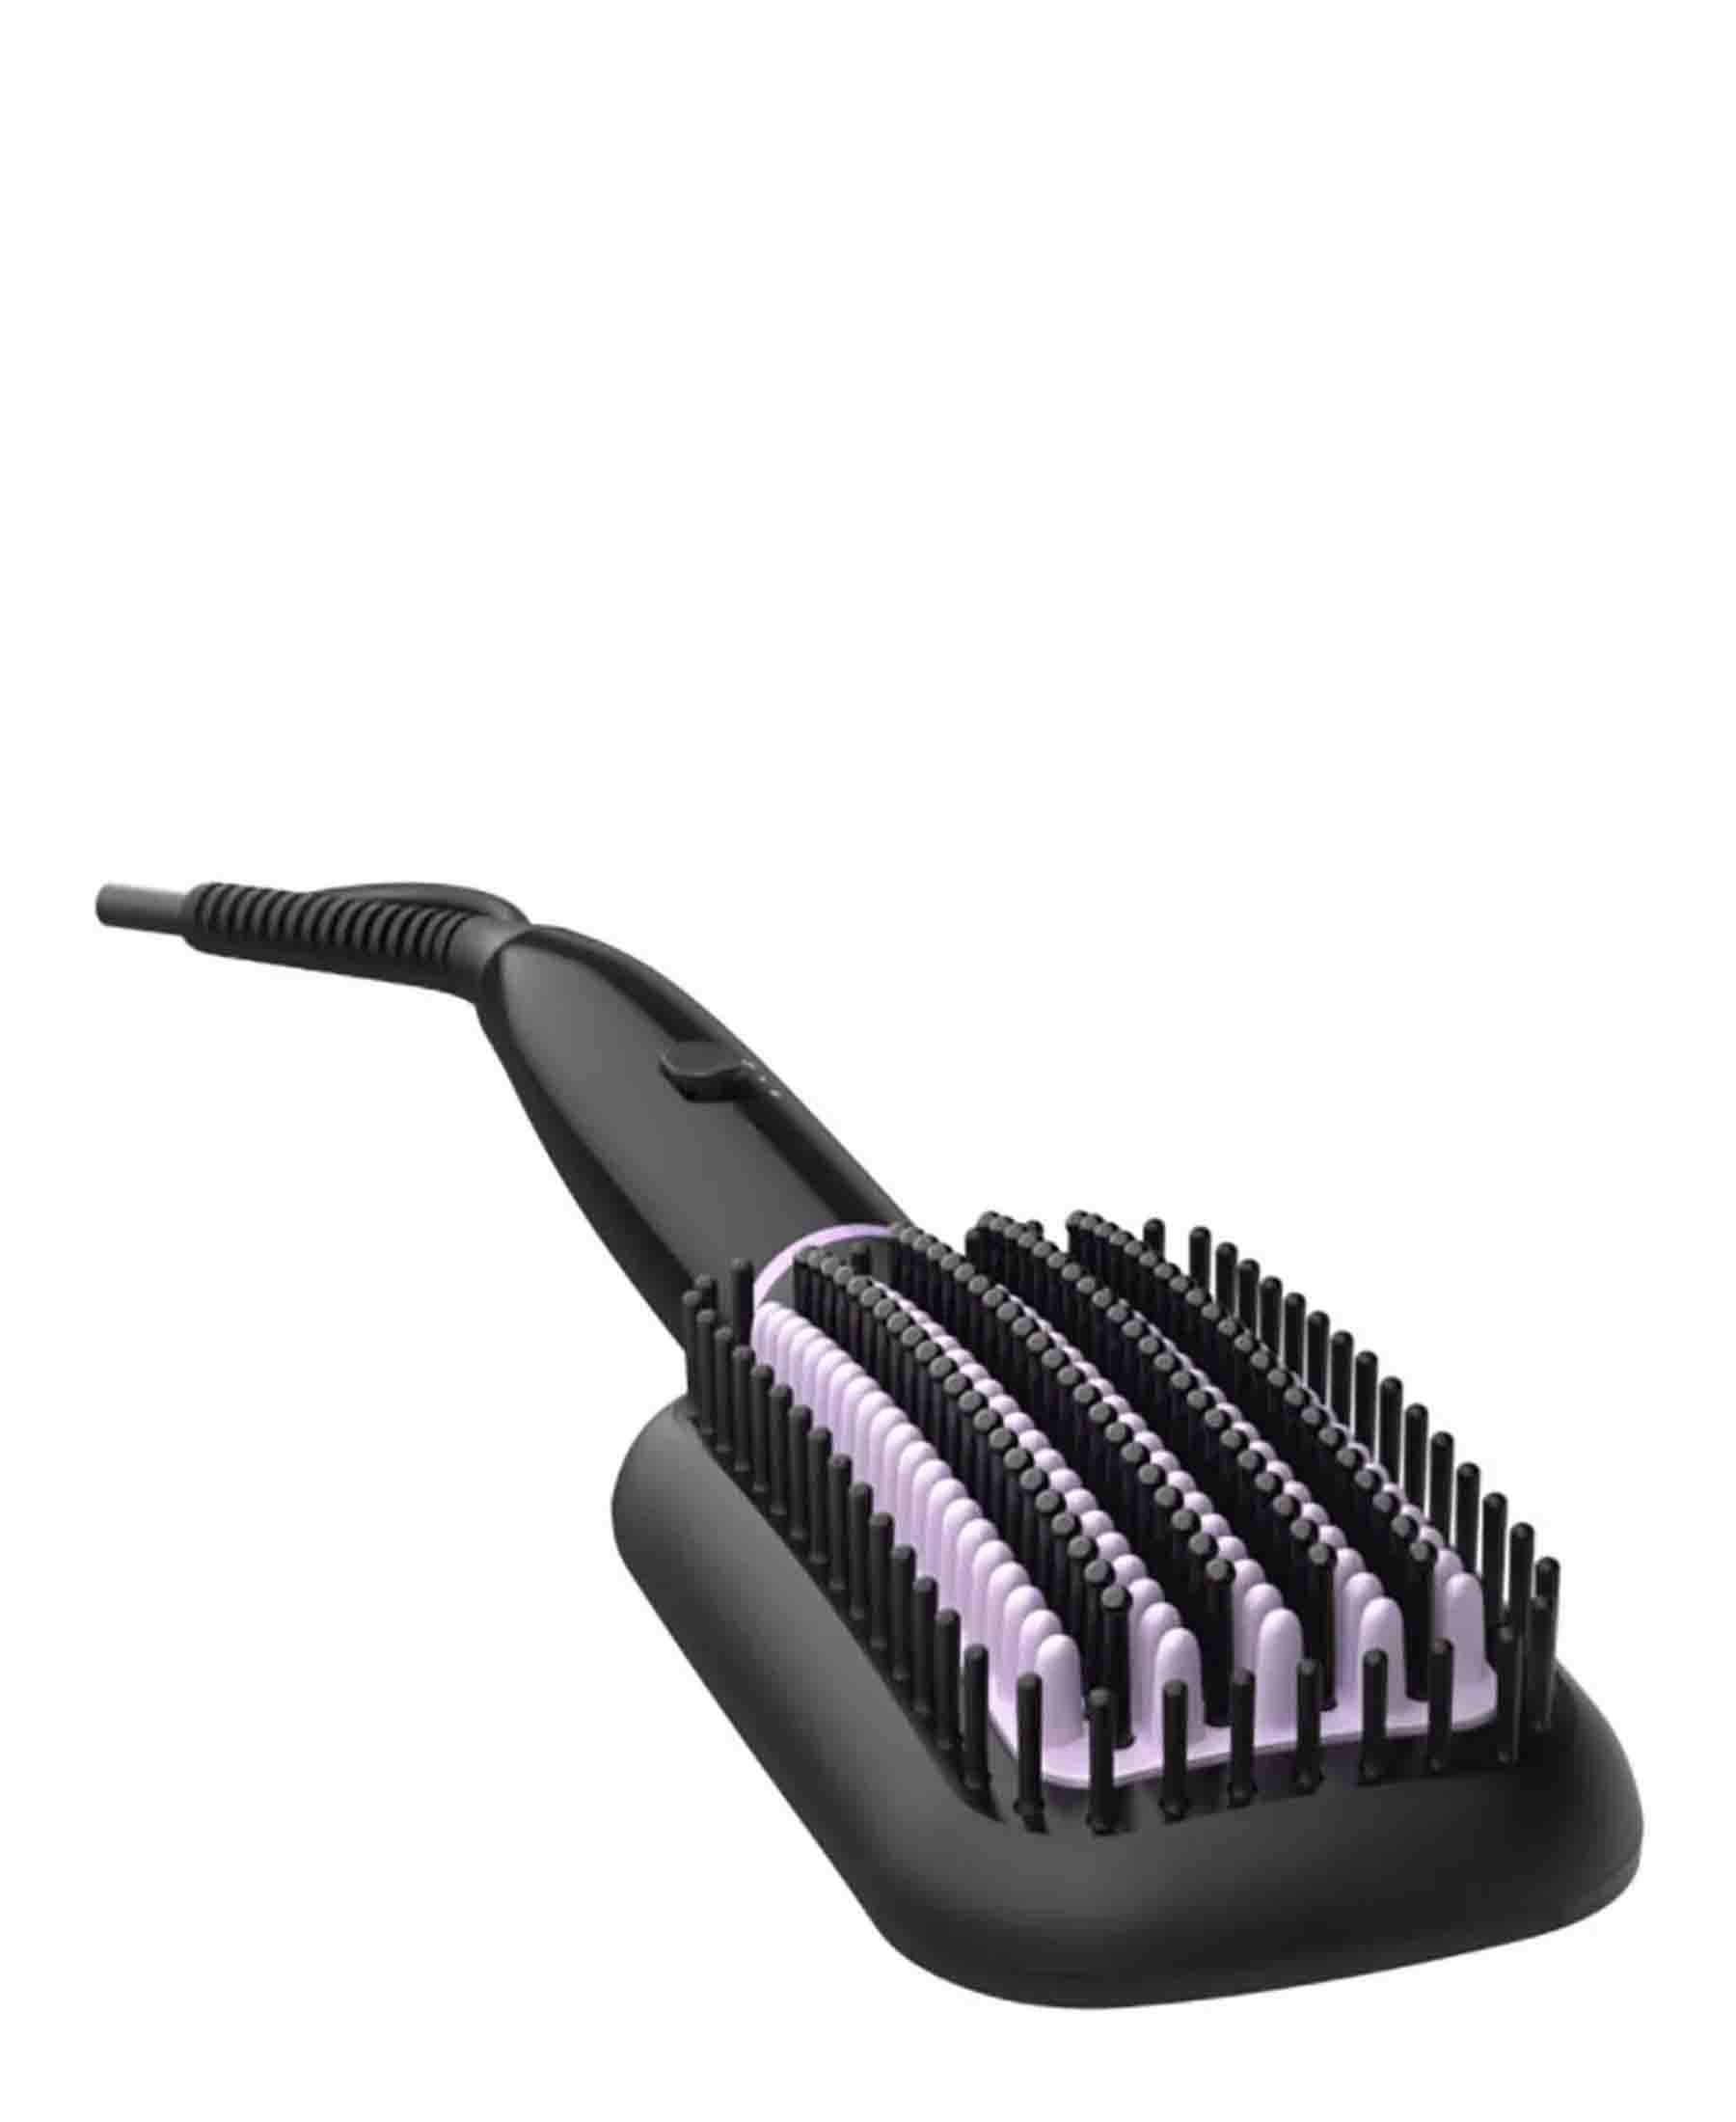 Philips StyleCare Essential Heated Straightening Brush - Black